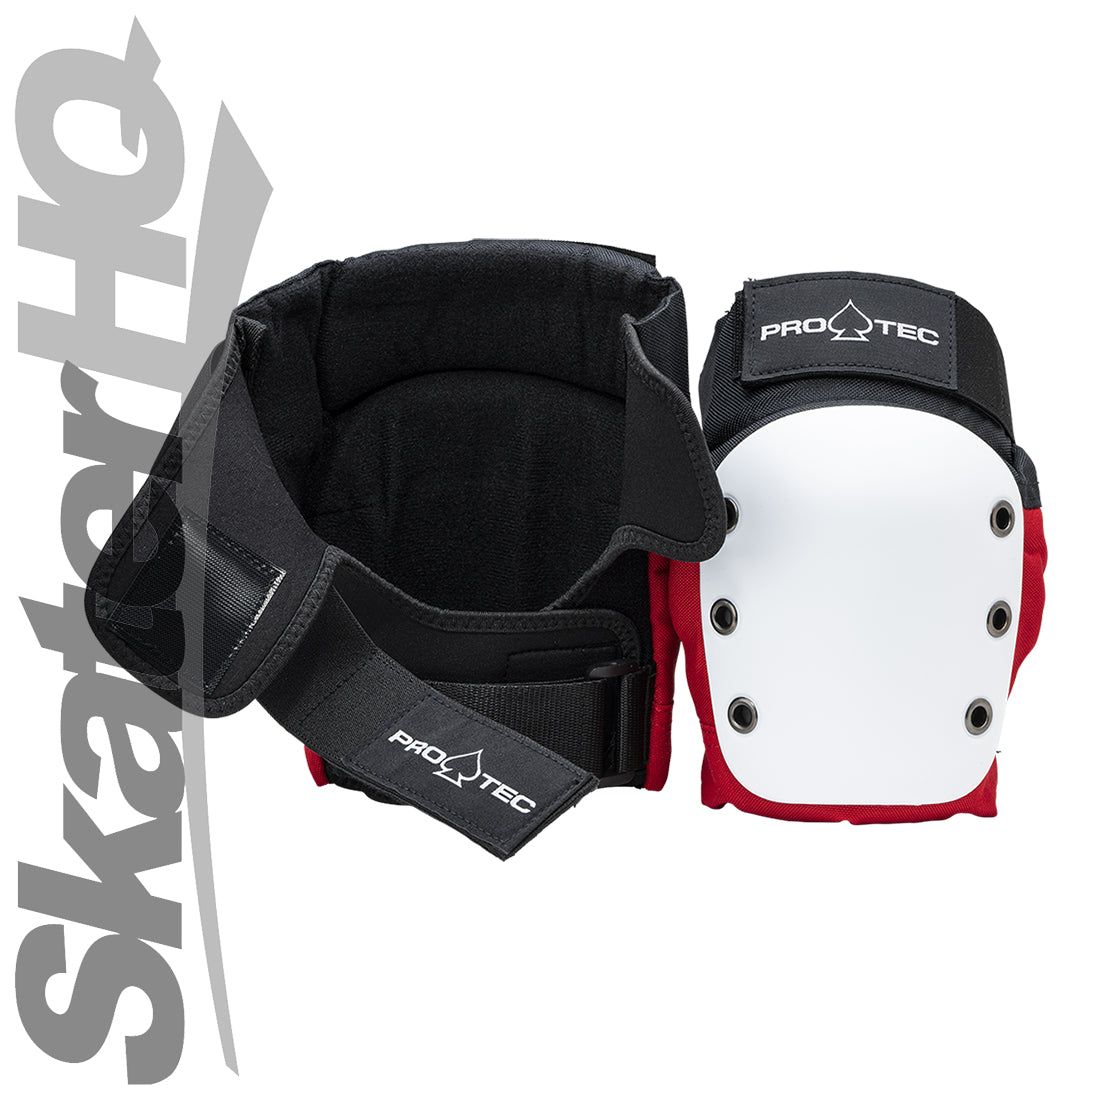 Pro-Tec Street Knee/Elbow Pad Set - Red/White/Black Protective Gear